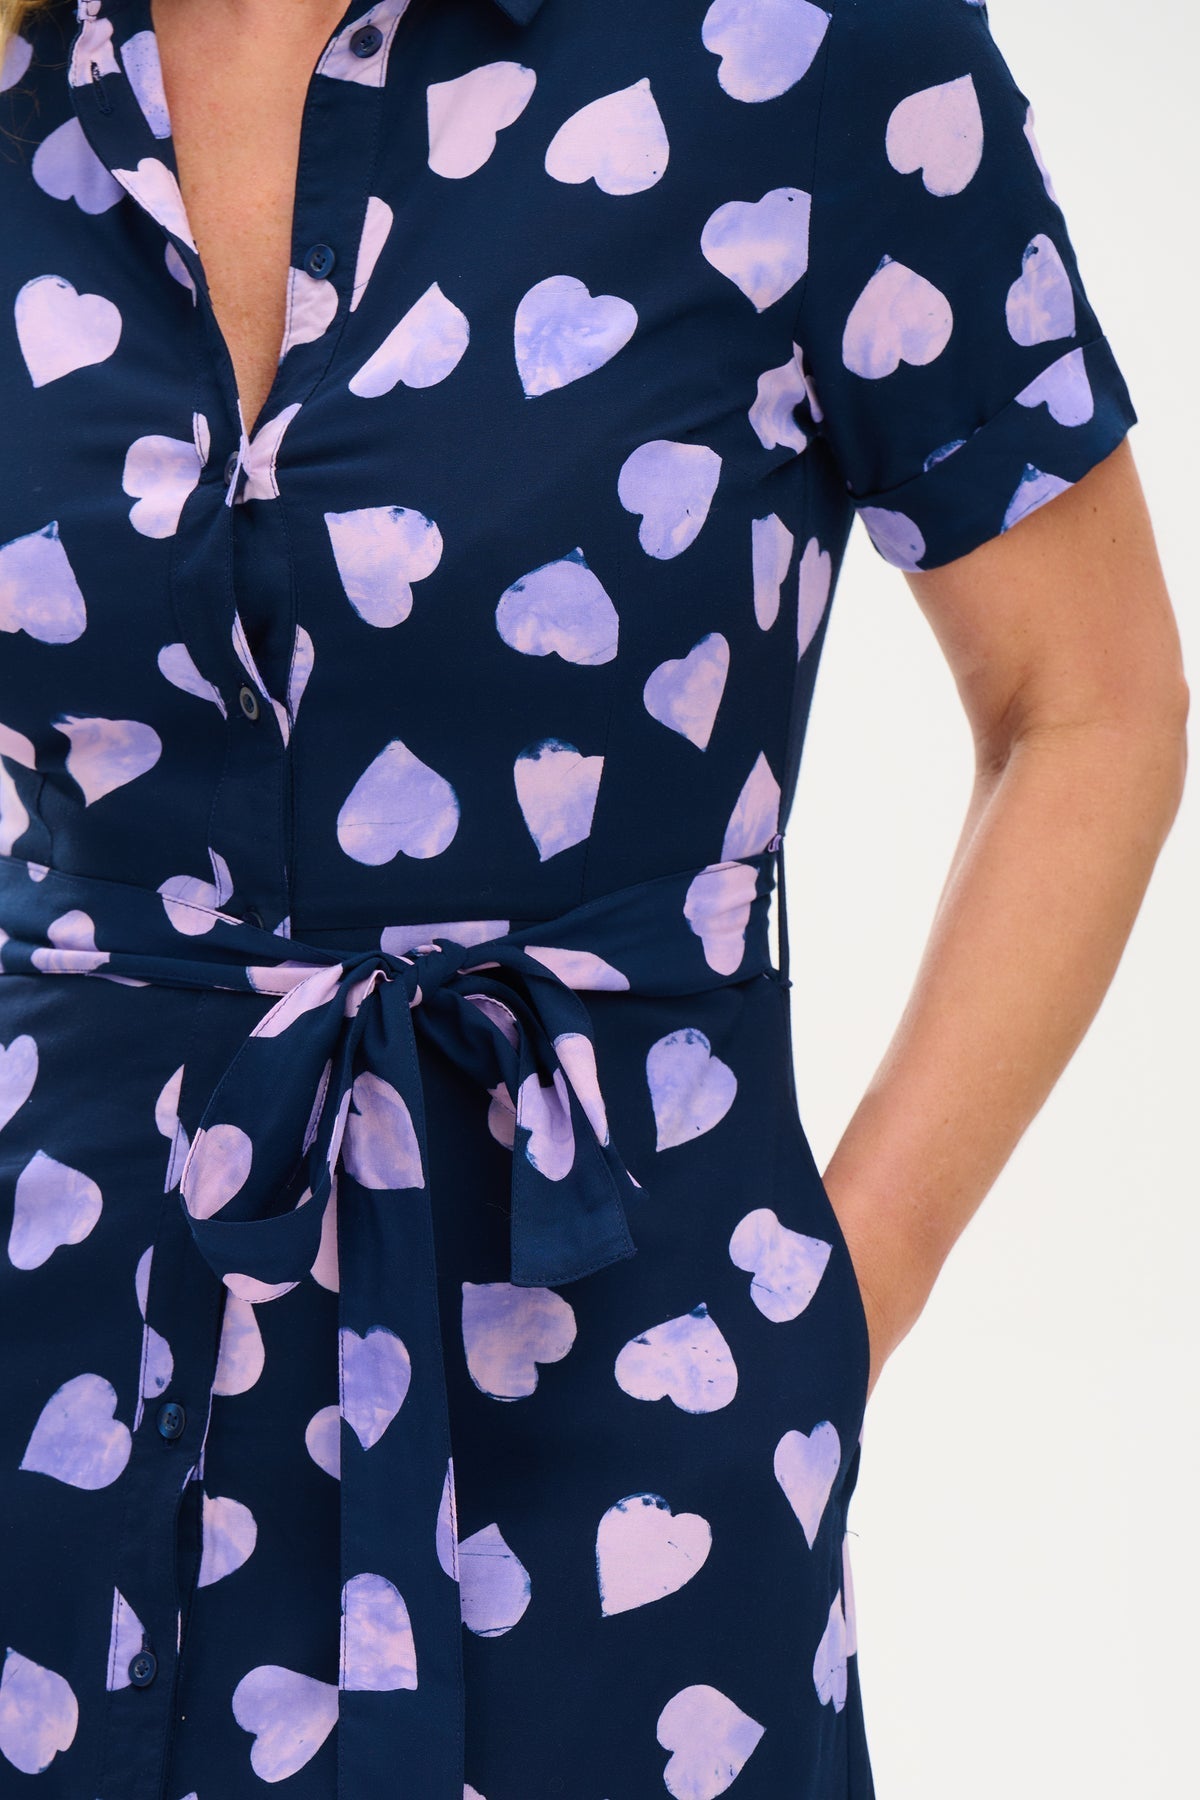 Lauretta Batik Shirt Dress - Navy & Lilac Big Hearts - Rockamilly-Dresses-Vintage